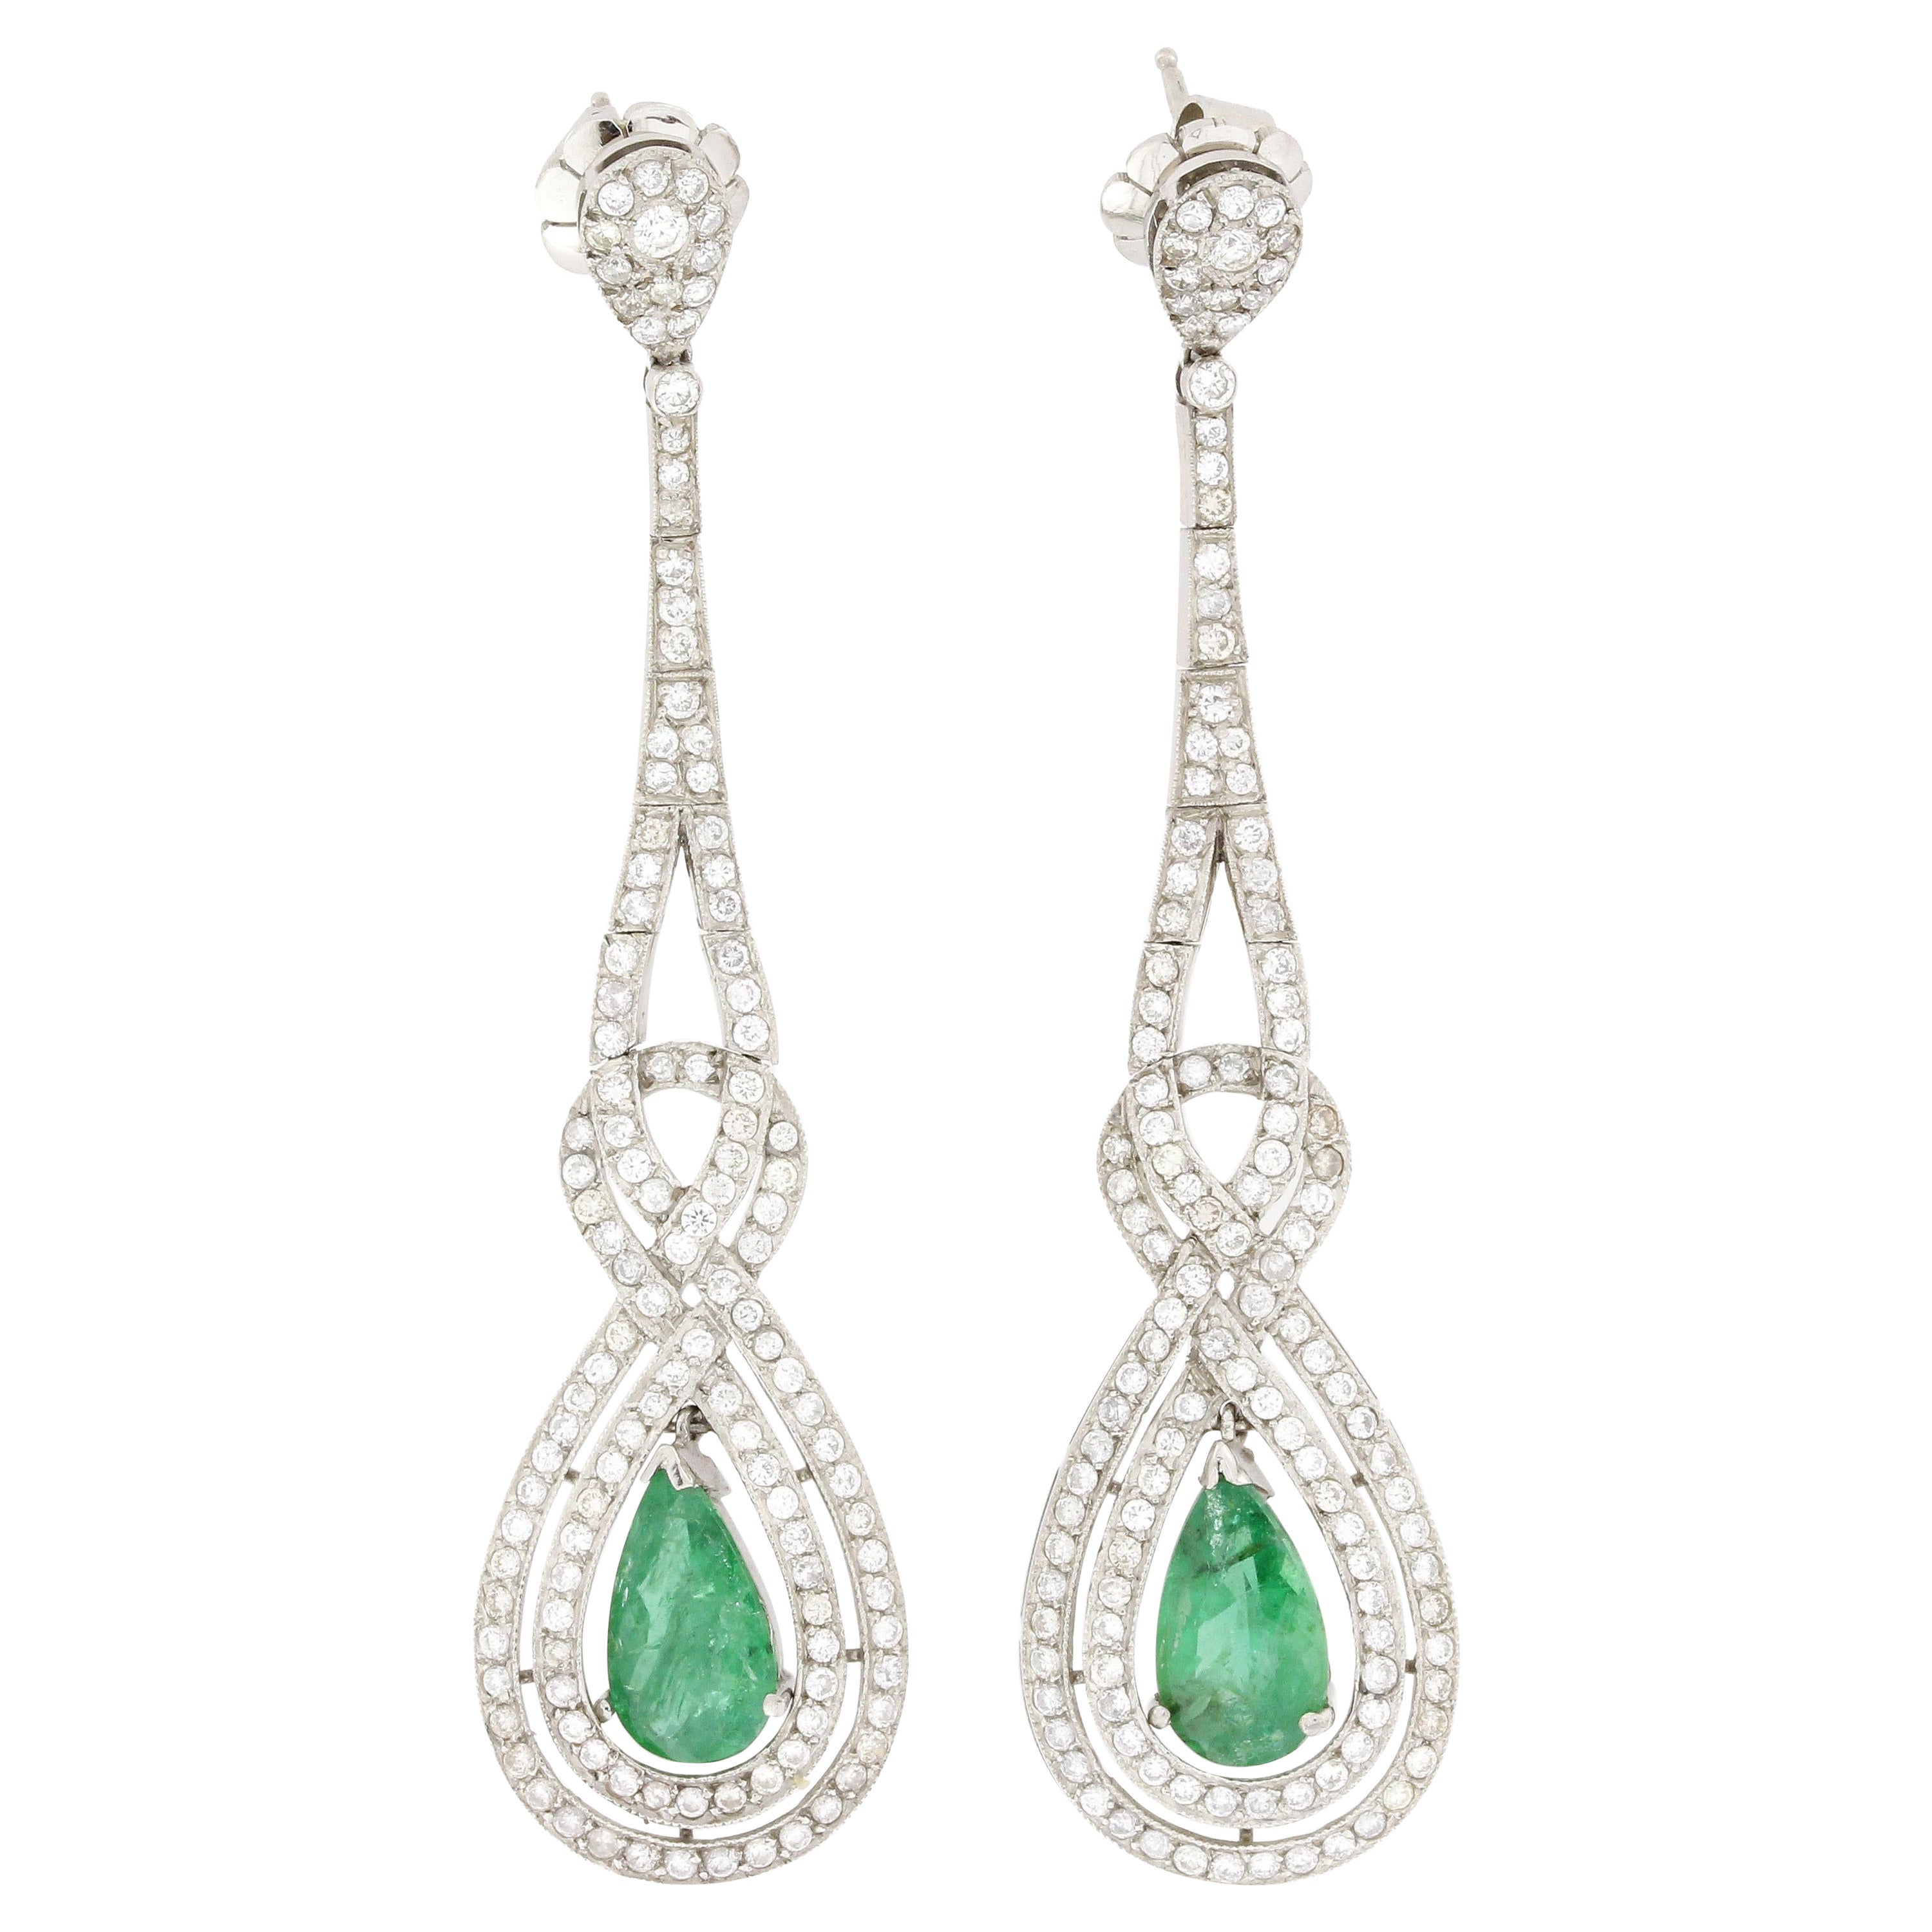 Antique Style 3.0 Carat Pear Cut Emerald Diamond Drop Earrings